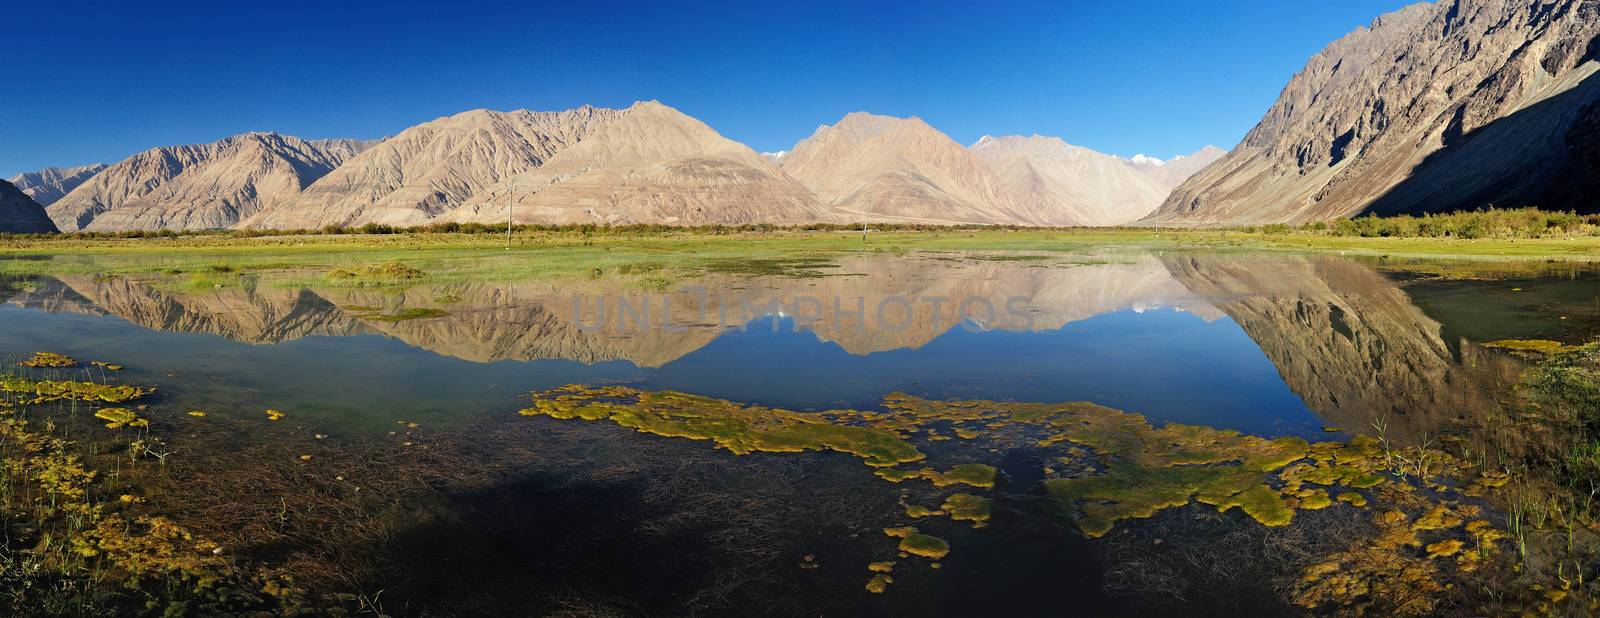 Beautiful scenic view of Leh valley, Ladakh range, Jammu & Kashm by think4photop